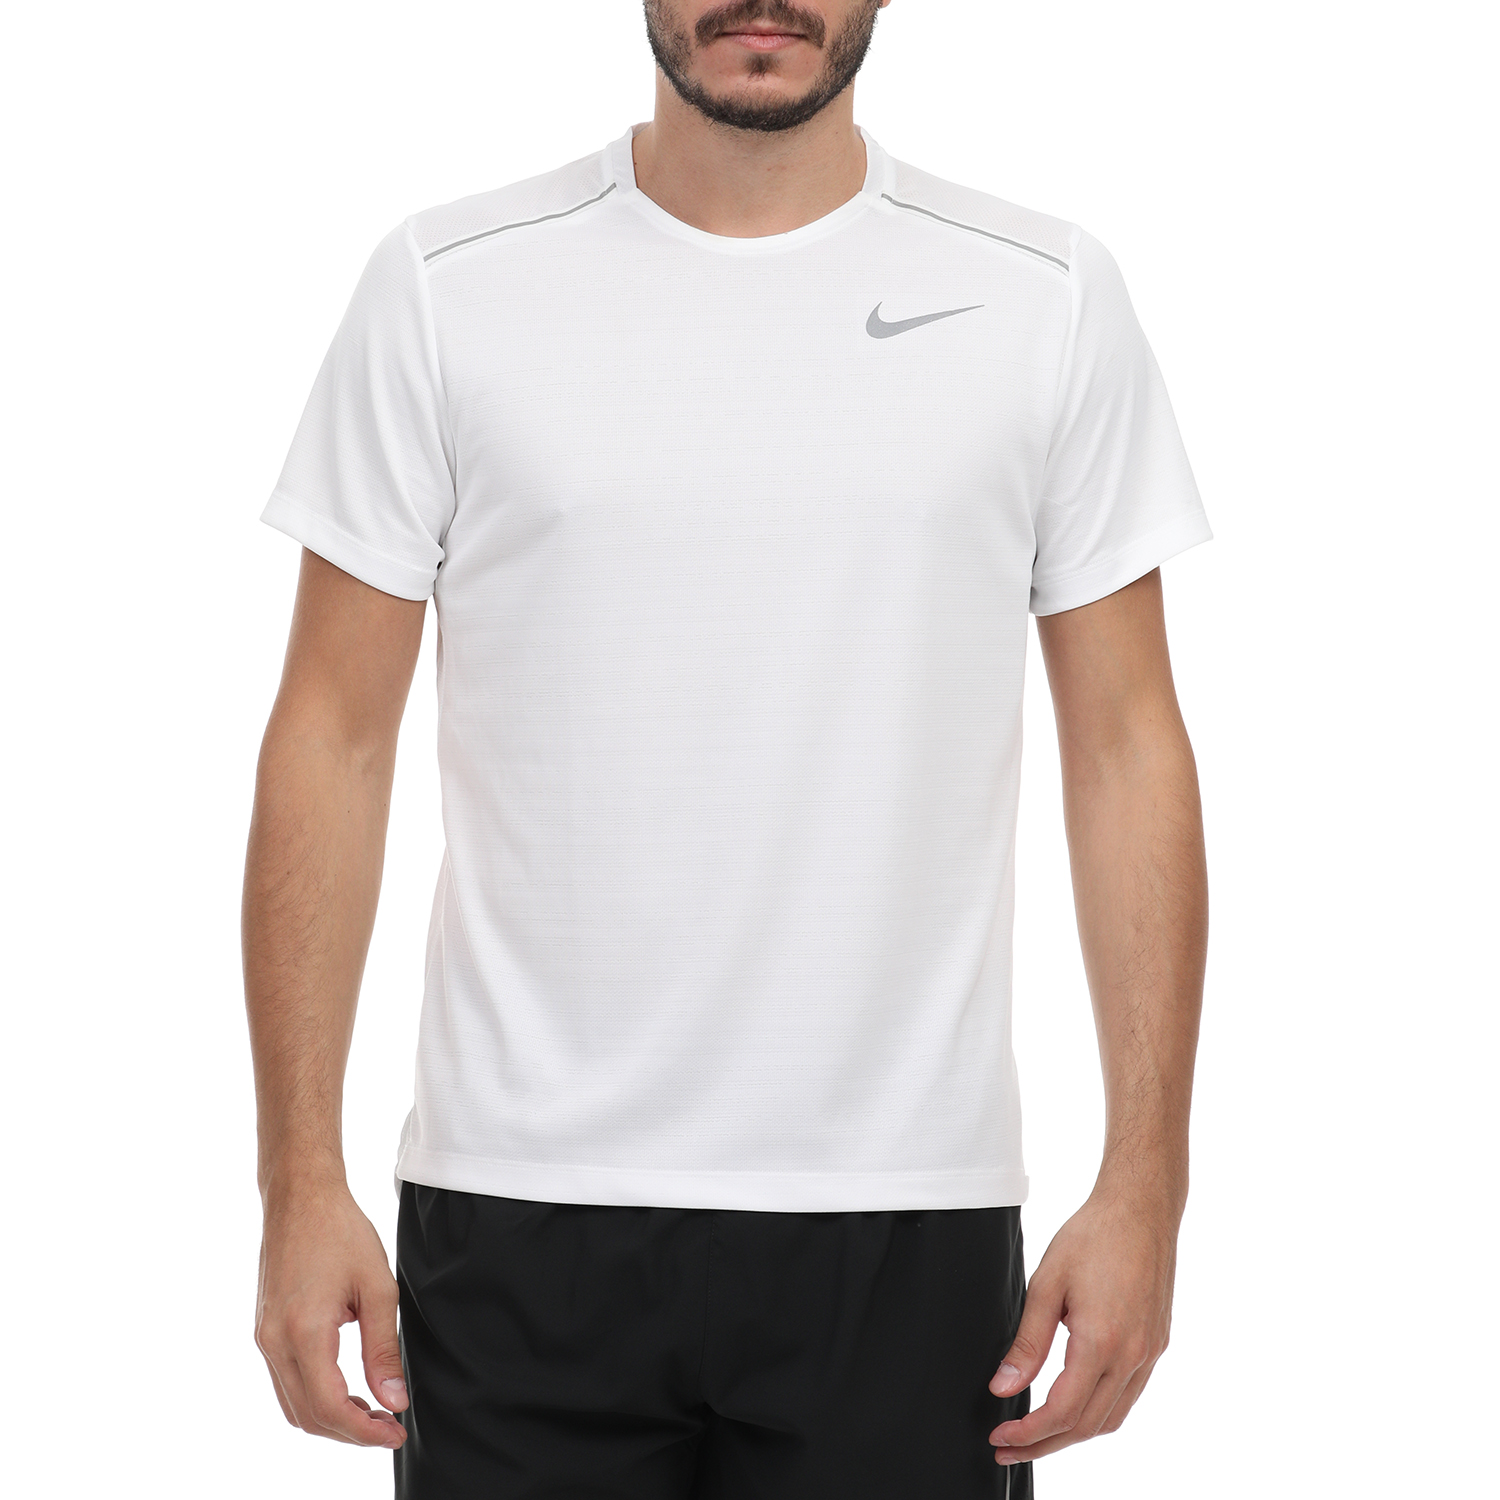 NIKE Ανδρικό t-shirt NIKE DRY MILER λευκό